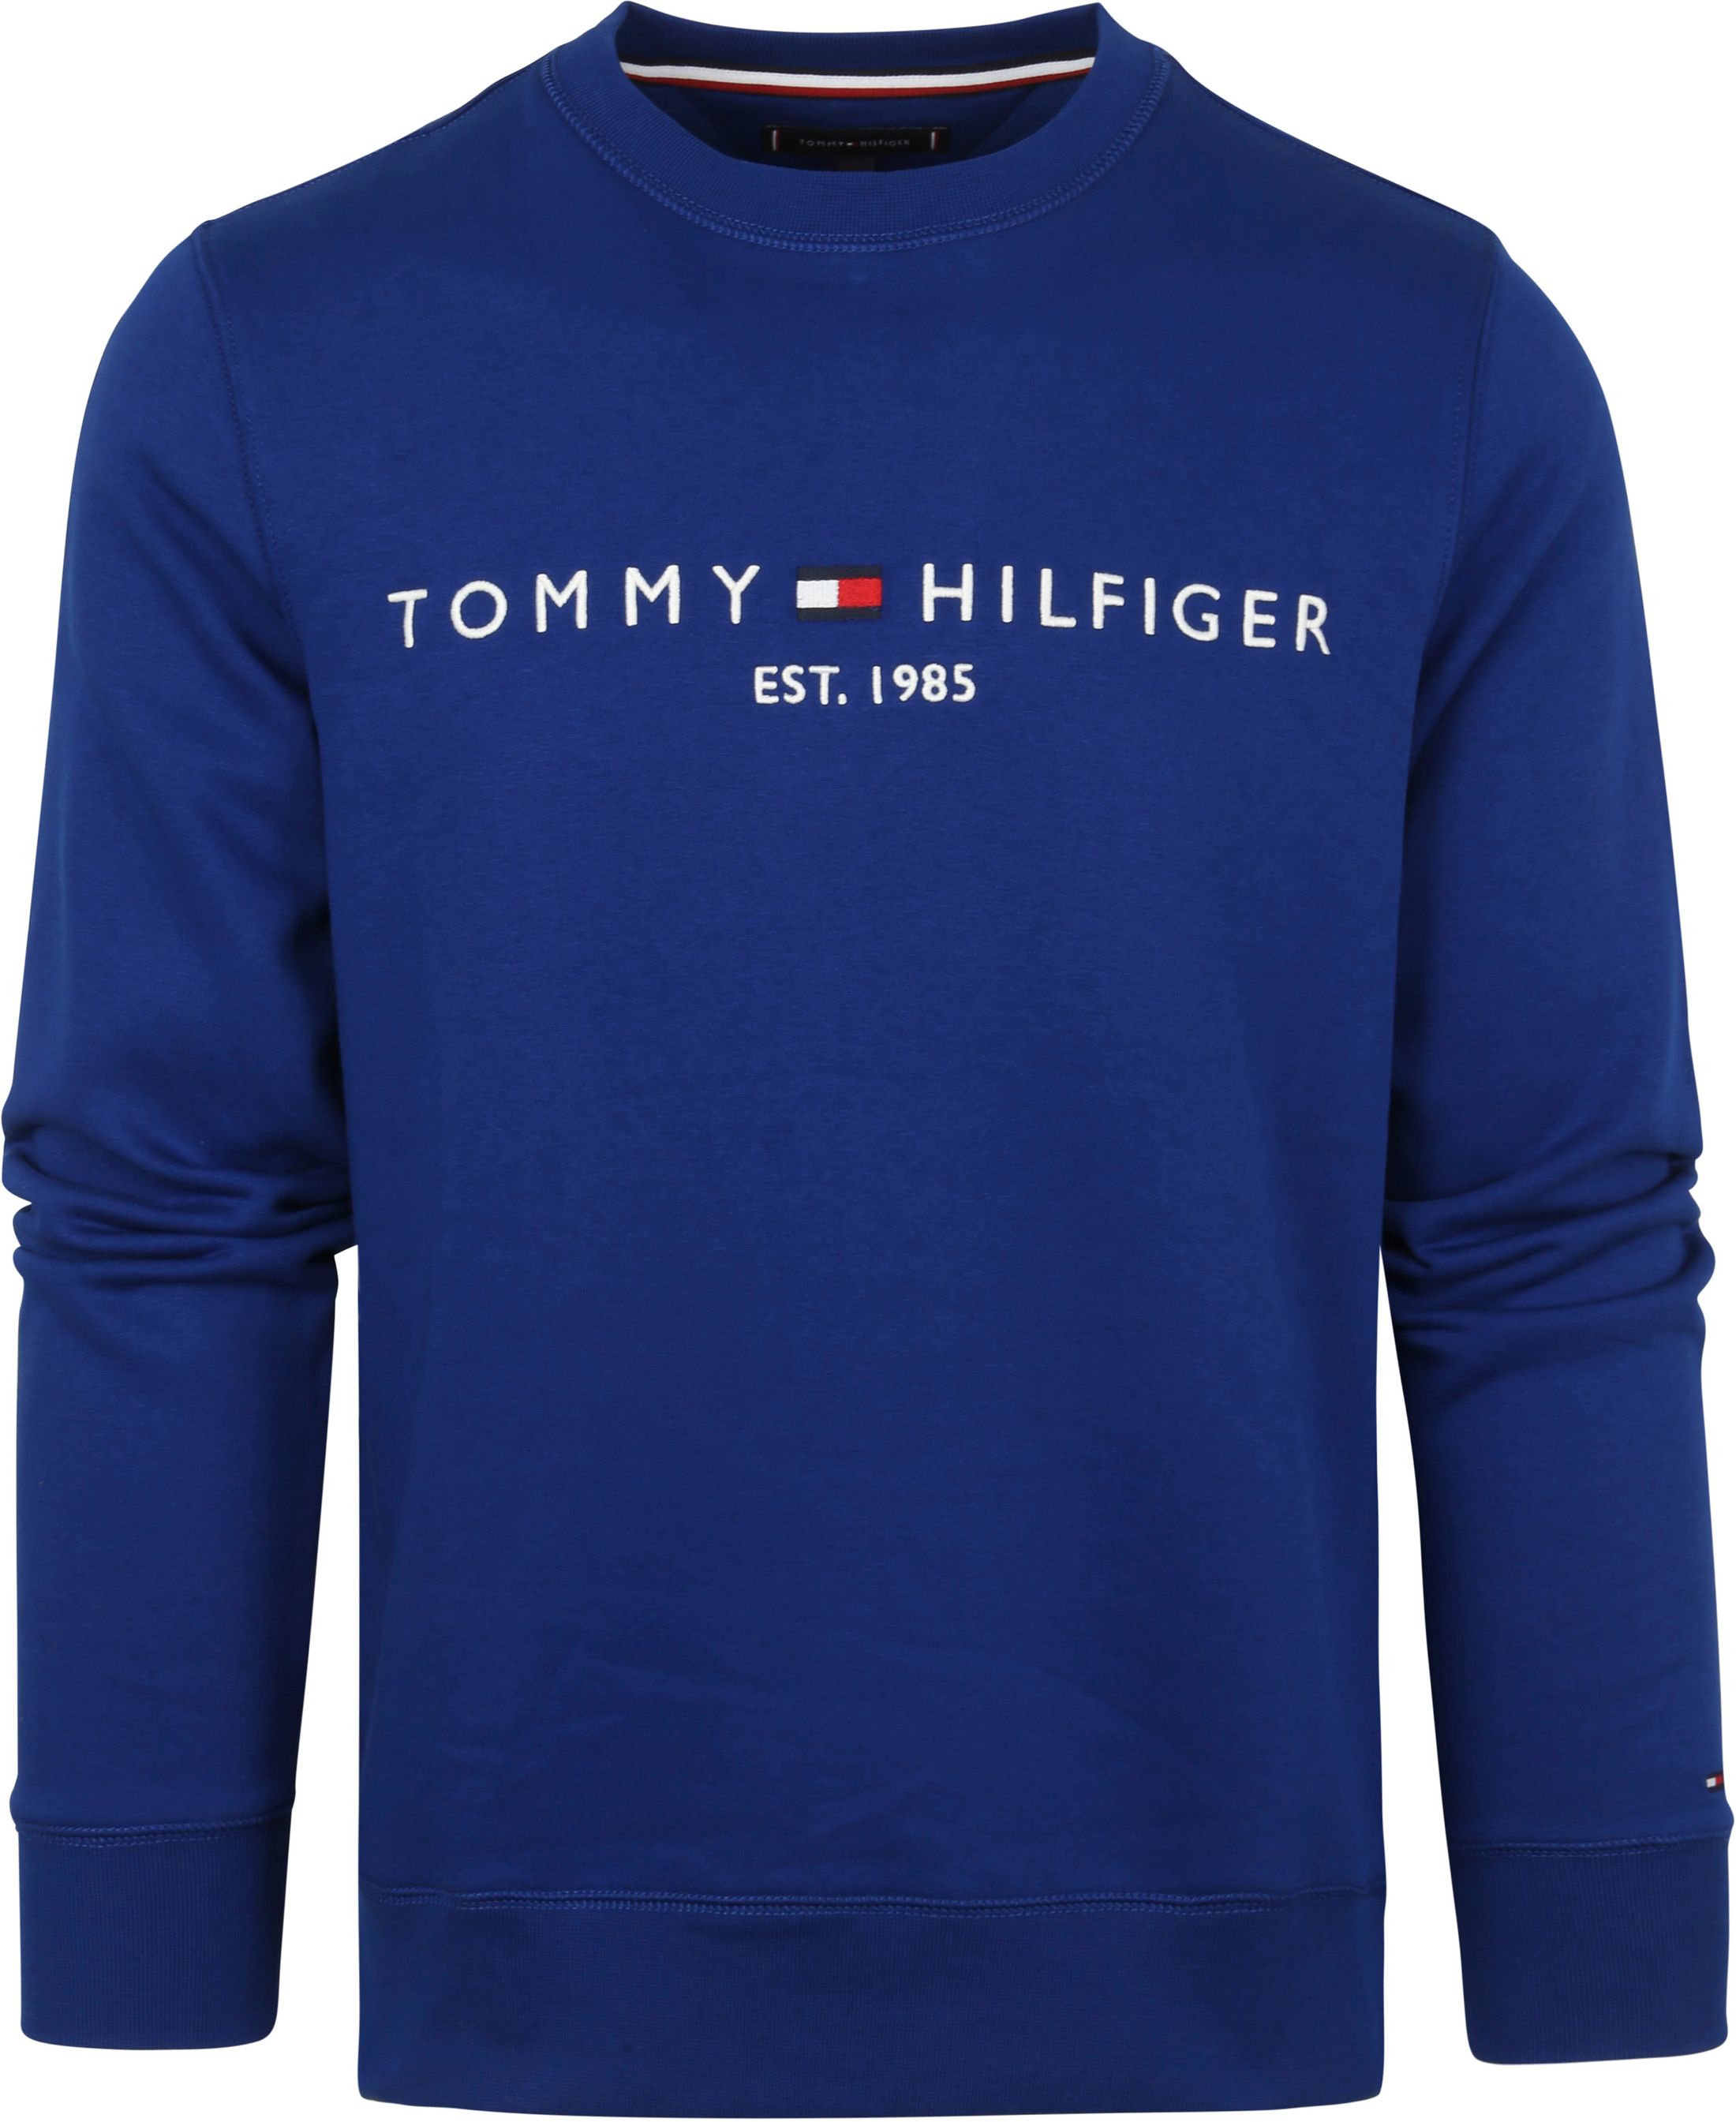 Tommy Hilfiger Sweater Logo Royal Blue size L